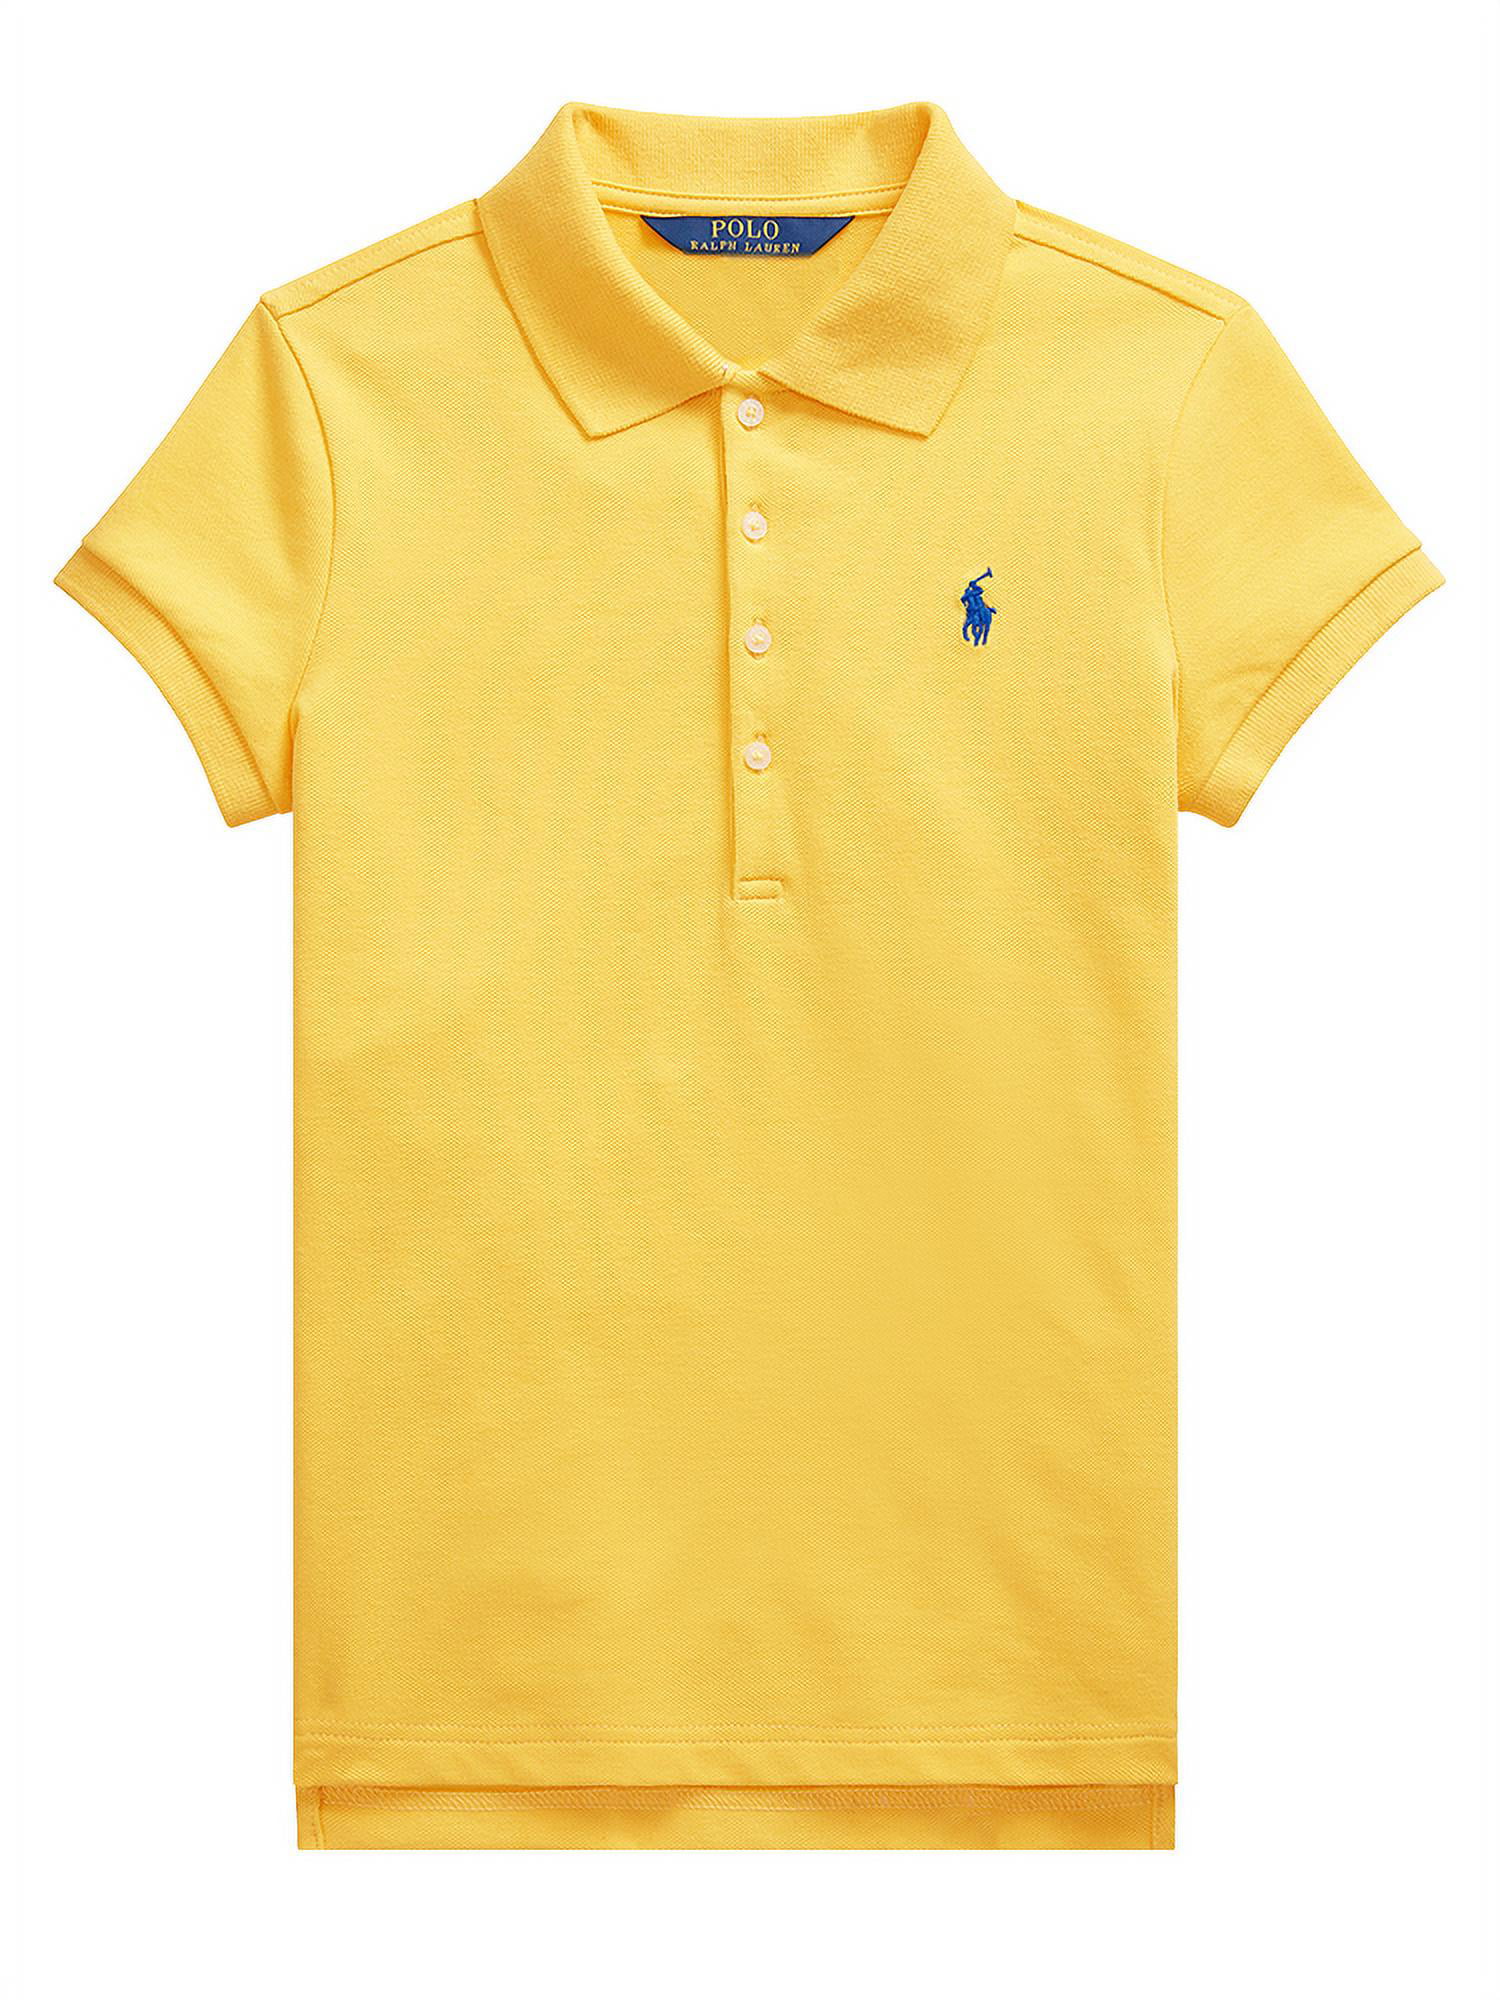 Ralph Lauren Girls Tennis Tail Polo Shirt - Chrome Yellow, Size 4/4T -  